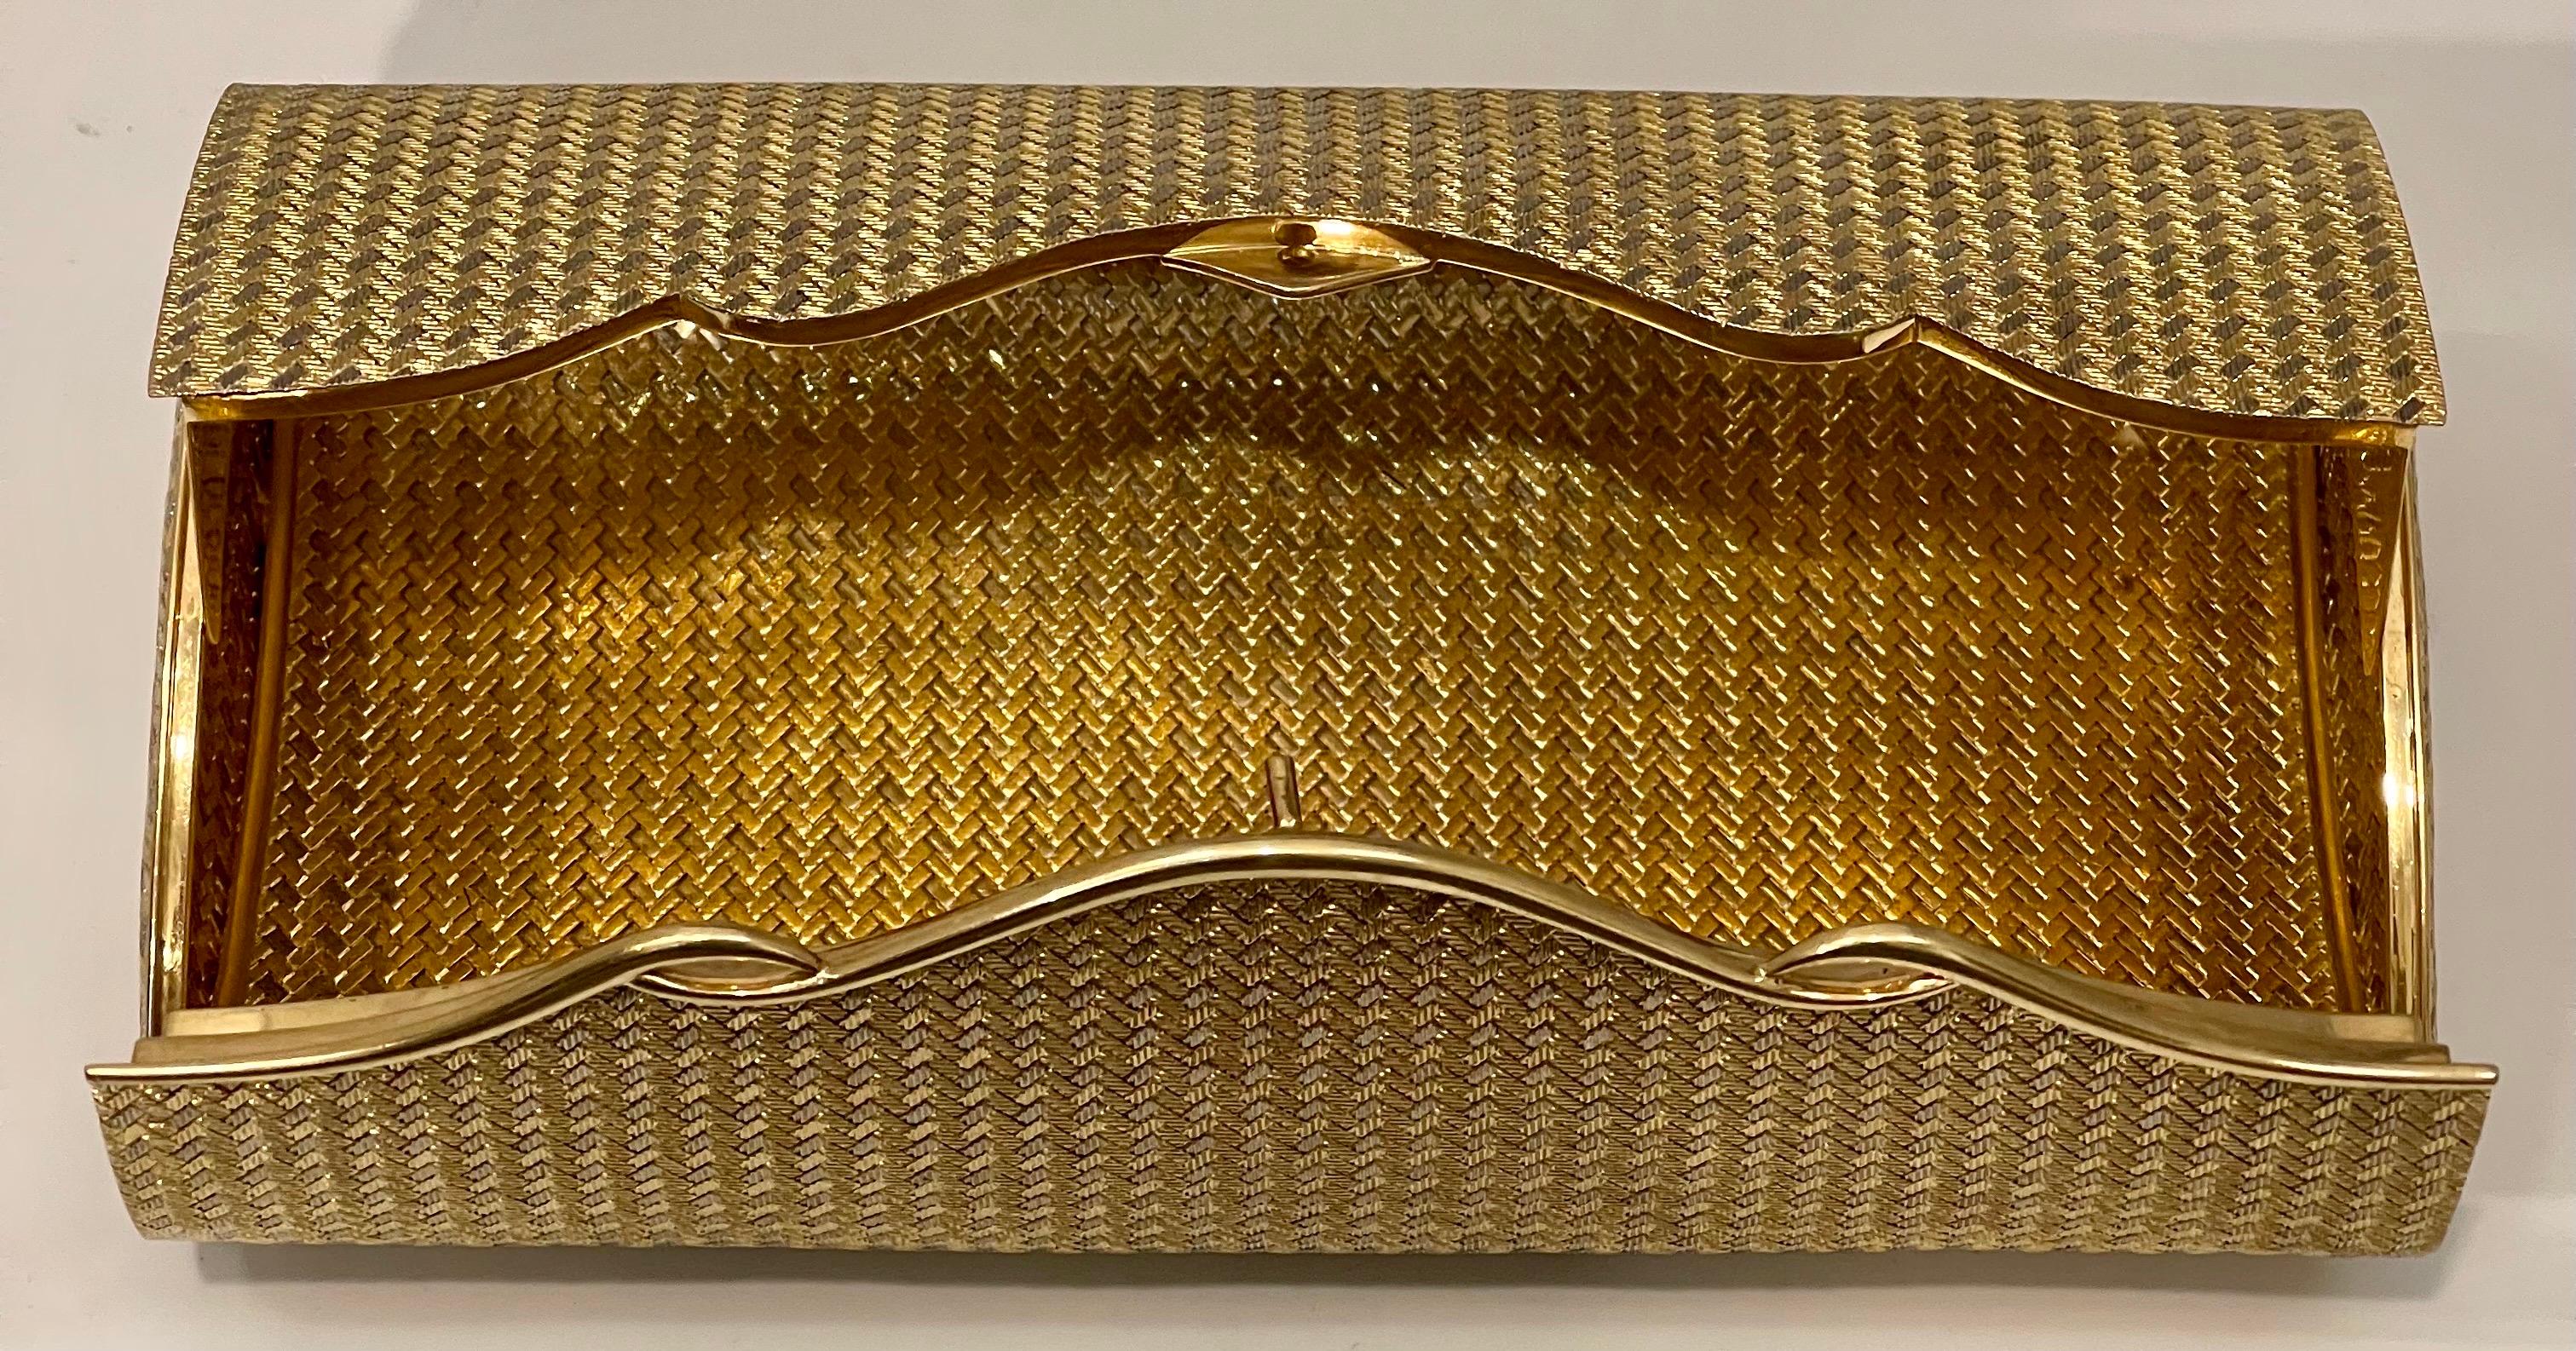 Art Deco Van Cleef & Arpels 18K Yellow Gold Mesh Clutch Handbag with Mirror Inside, Rare For Sale